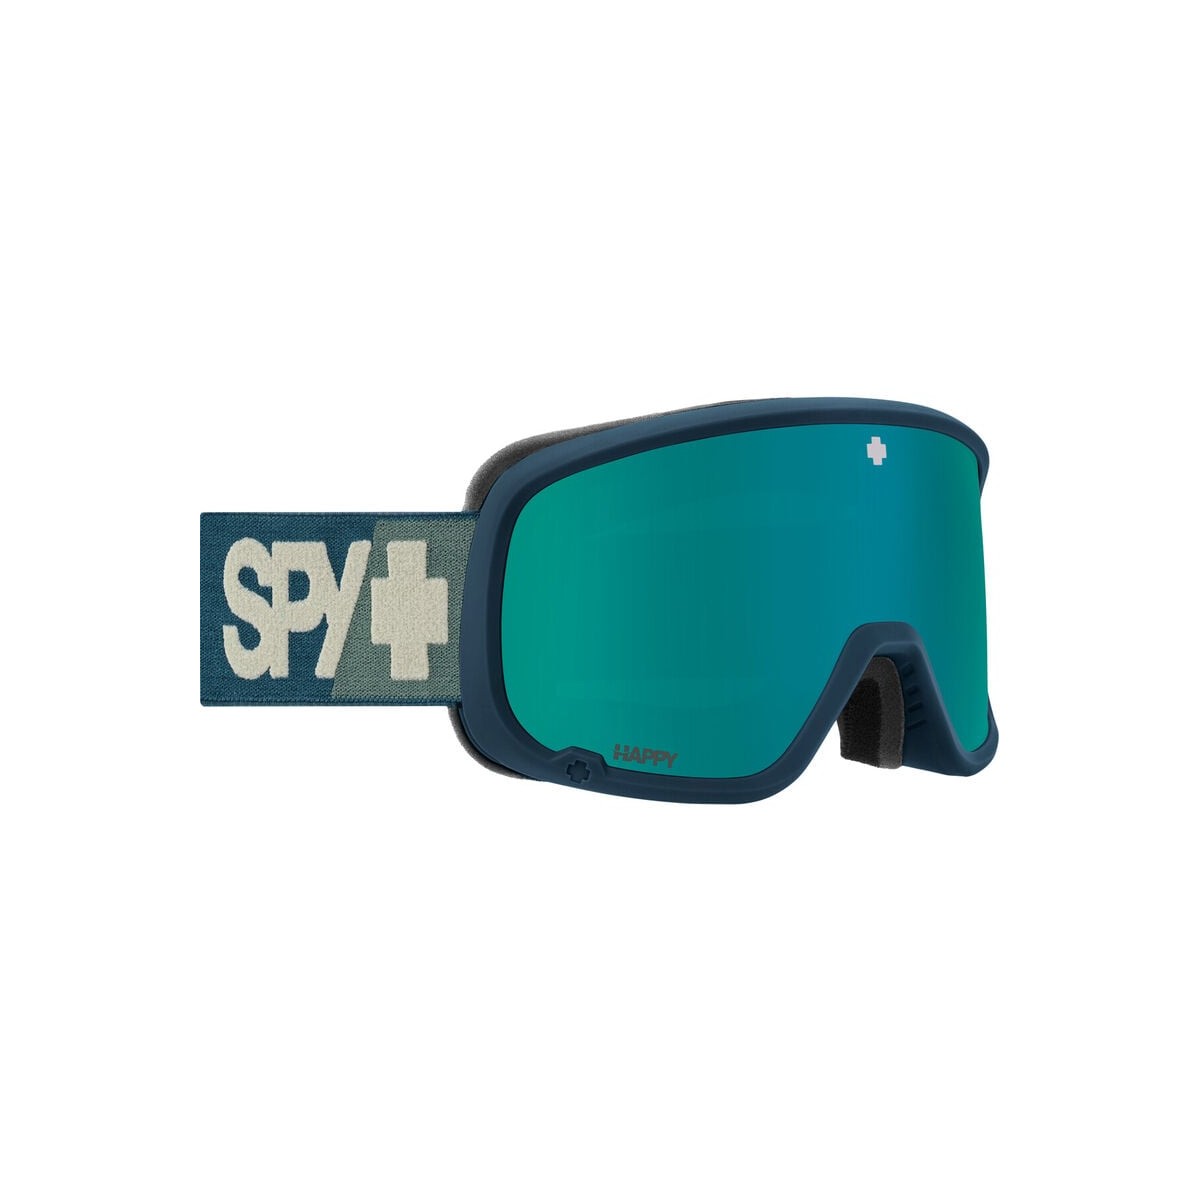 SPY MARSHALL 2.0 SNOW brilles - zaļas